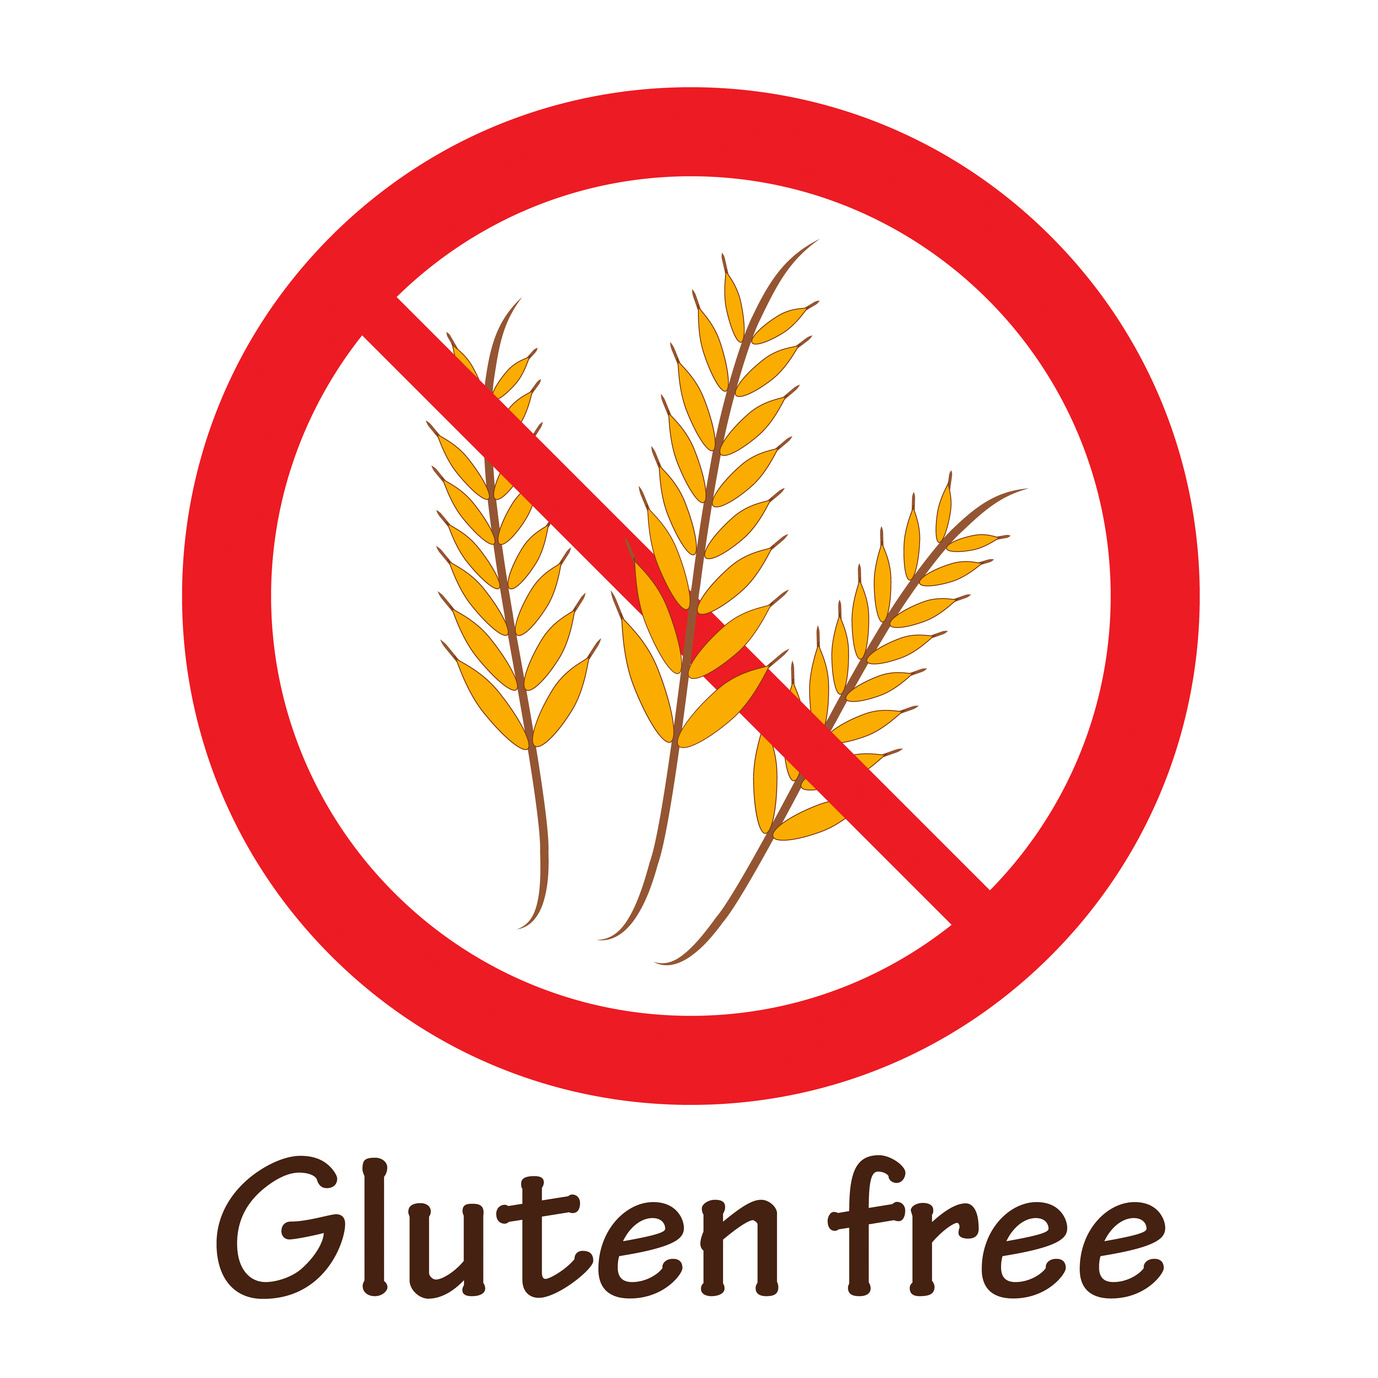 katilda.com: why i'm going gluten free